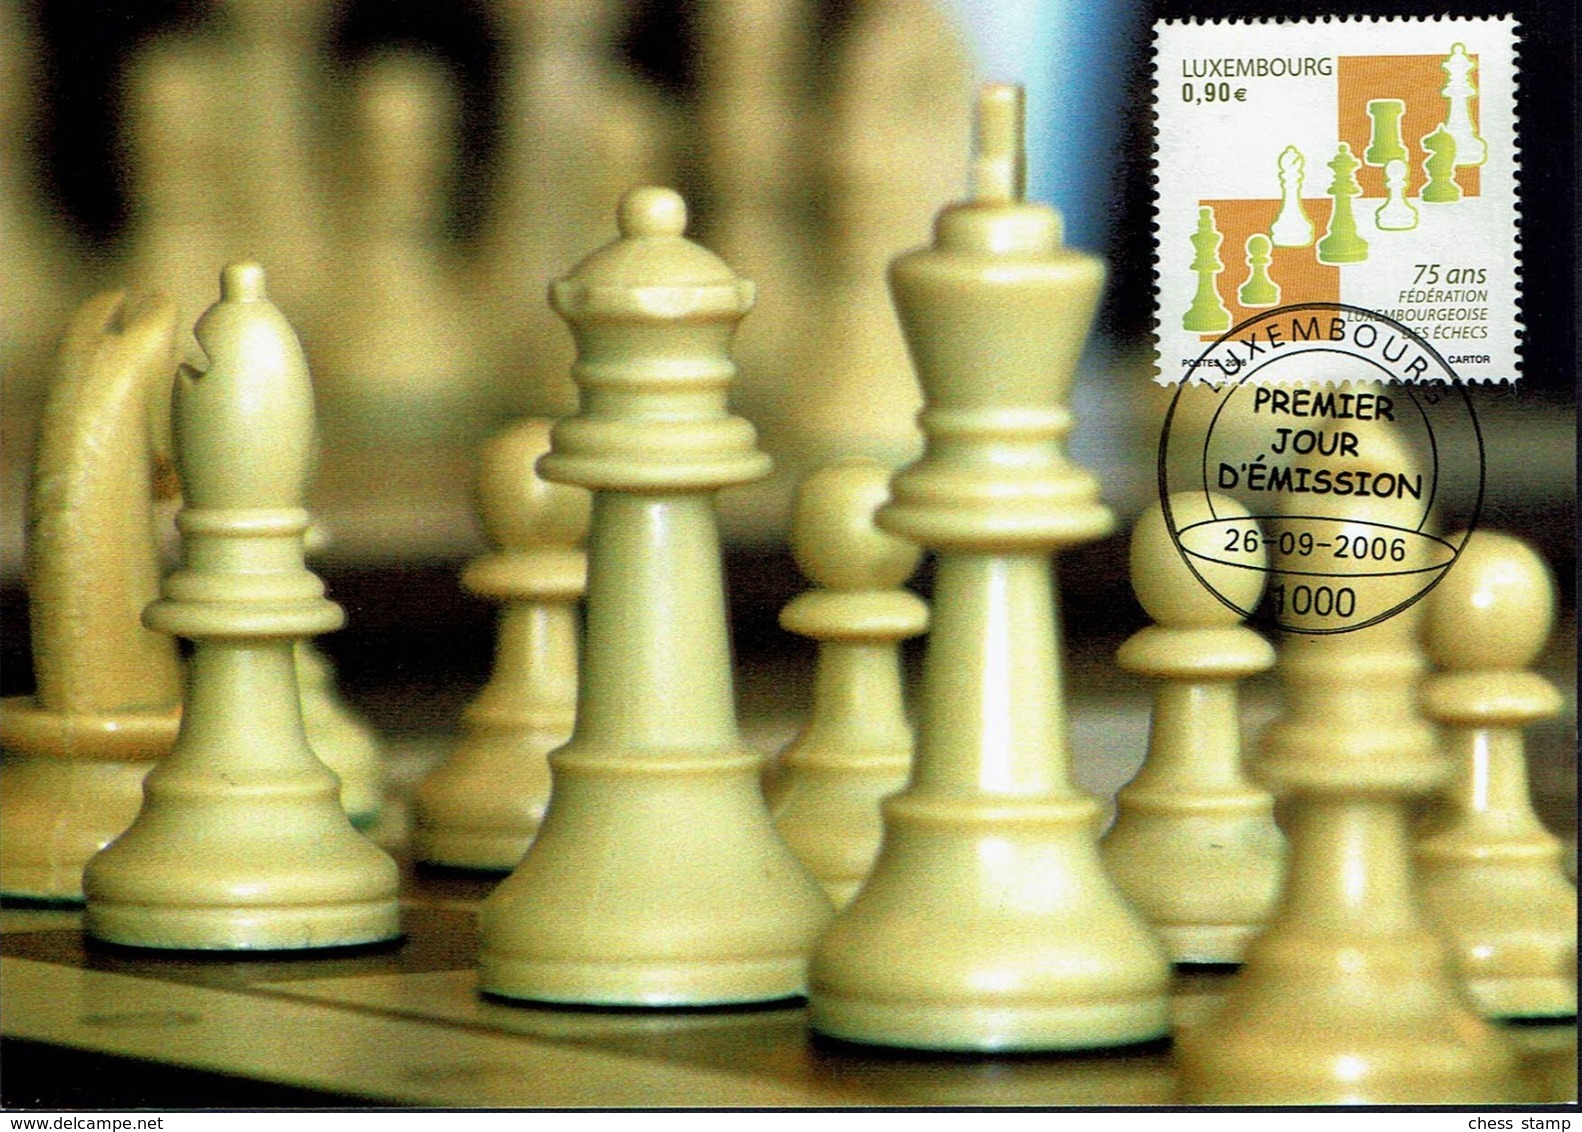 Luxemburg - Luxembourg 2006 - MiNr 1715 - Schach Chess Ajedrez échecs - MK - Schach